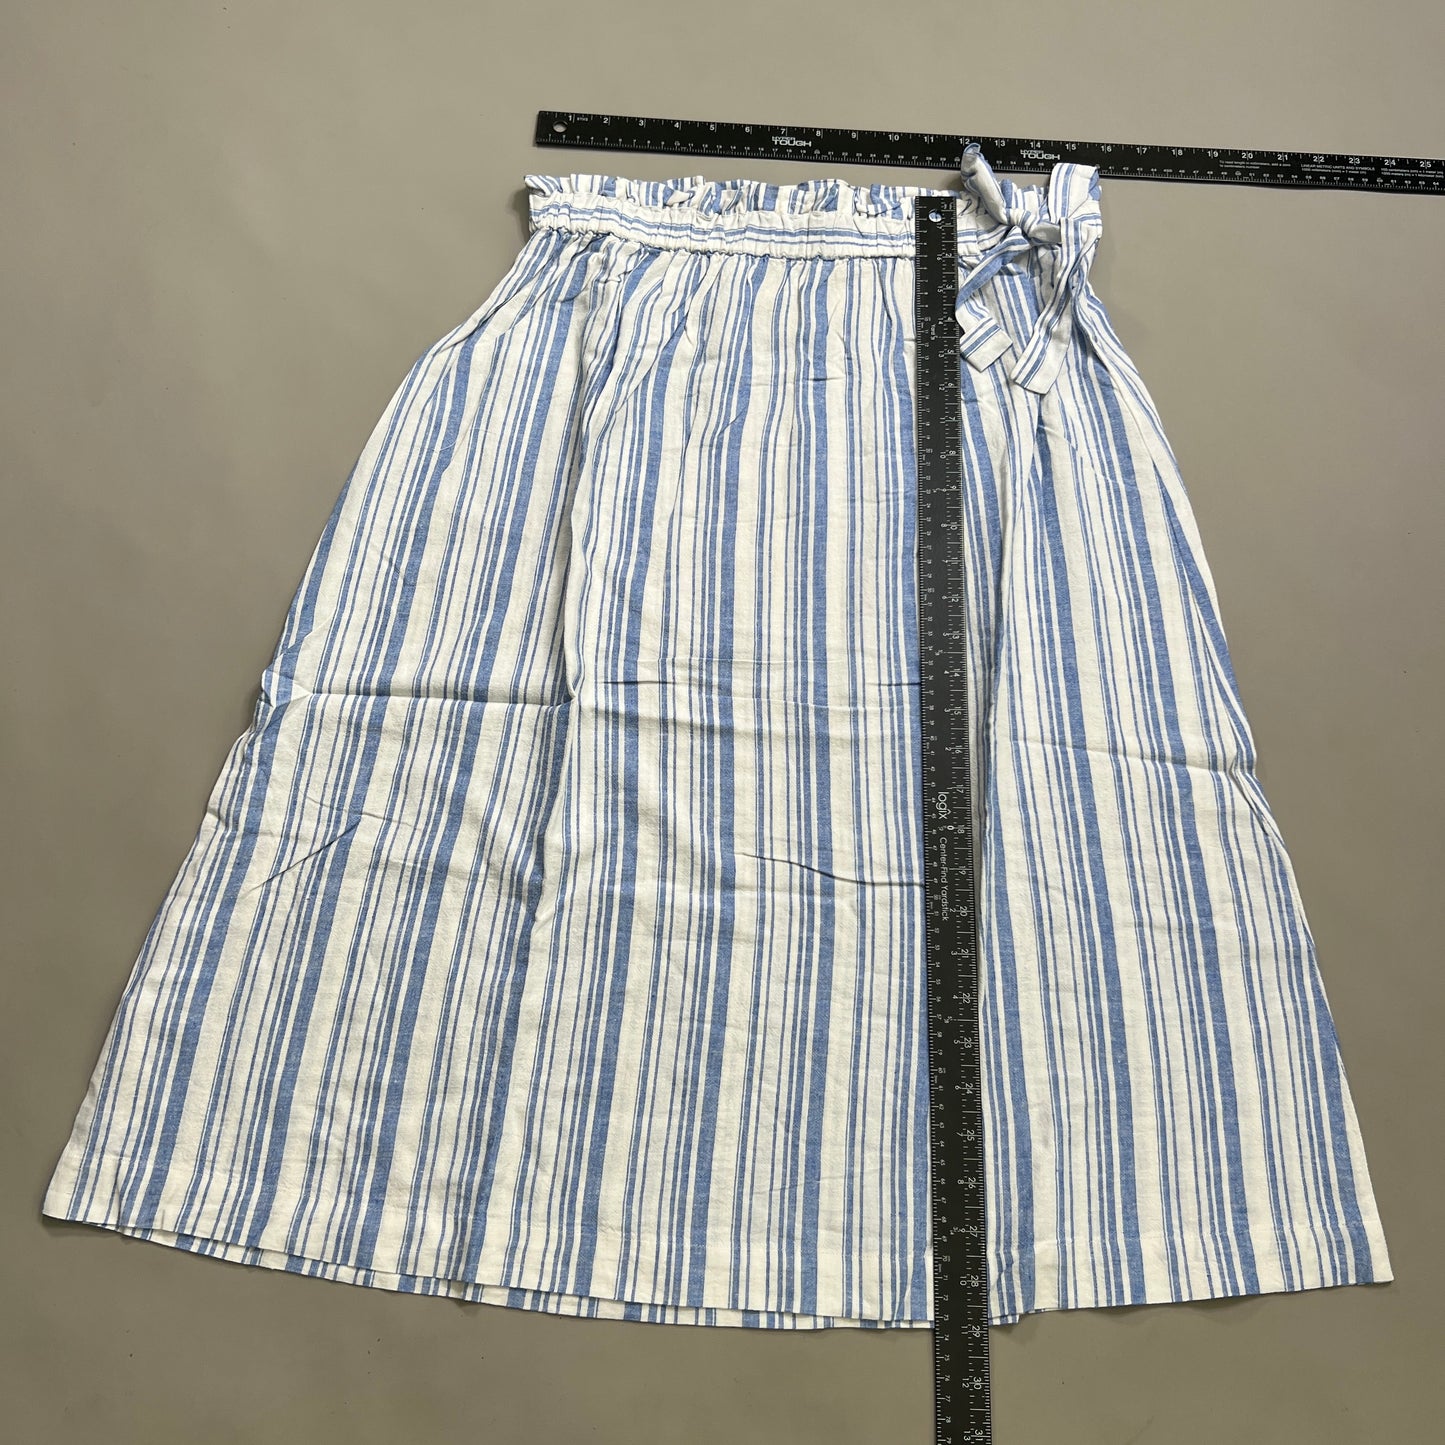 TOMMY BAHAMA Women's Shell Yea Stripe Midi Skirt Turkish Sea Size M (New)